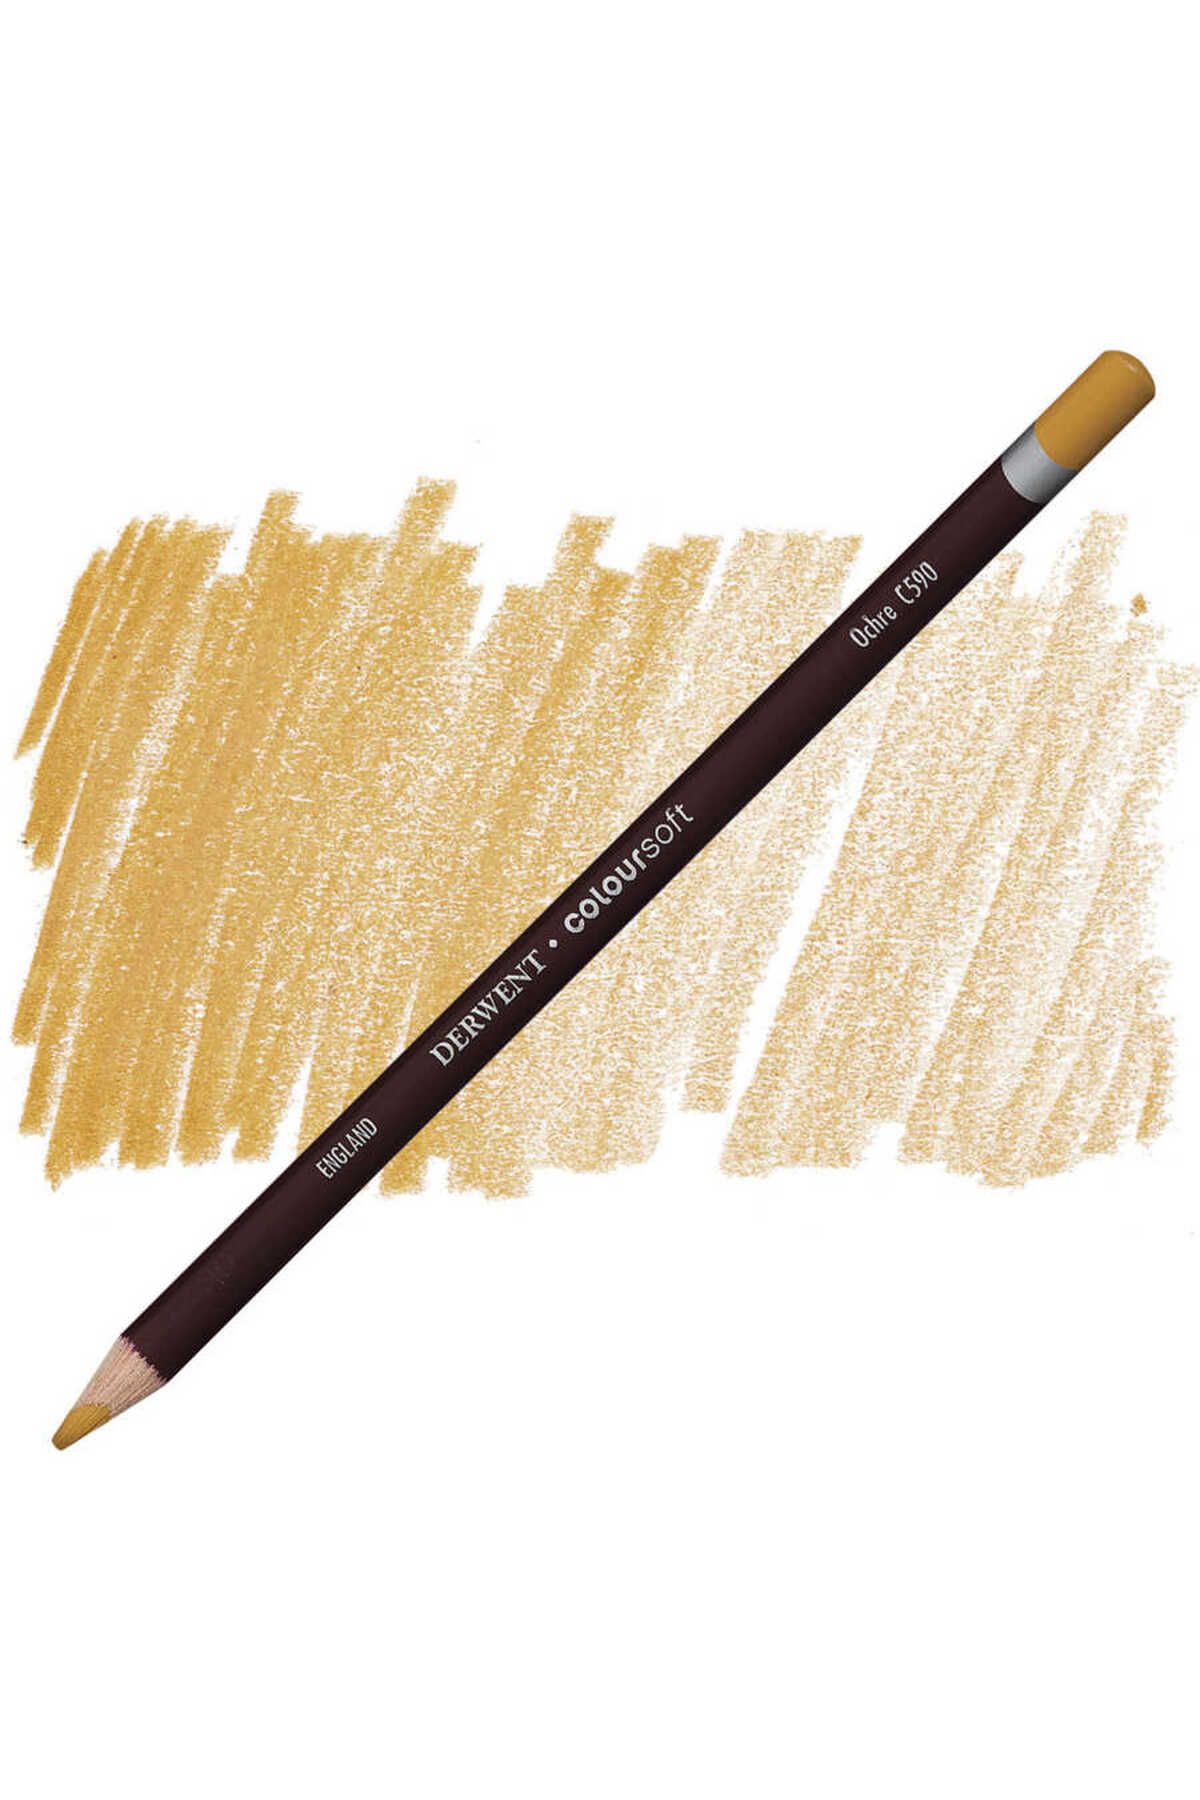 Derwent Coloursoft Pencil Yumuşak Kuruboya Kalemi C590 Ochre